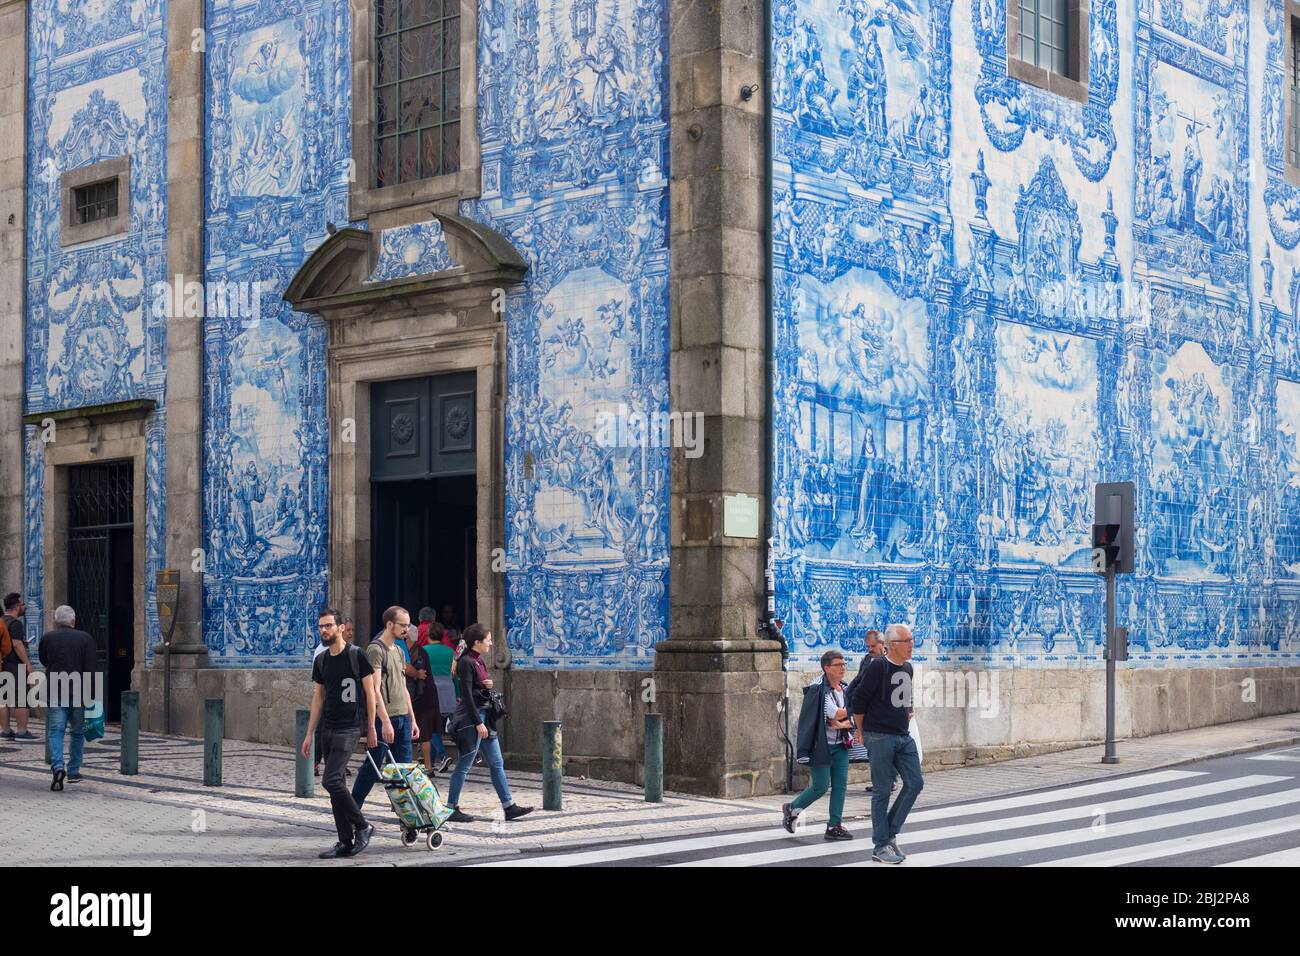 Berühmte Azulejos Portugiesische blaue und weiße Wandfliesen im 18. Jahrhundert Capela das Almas de Santa Catarina - St. Katharinenkapelle in Porto, Portugal Stockfoto